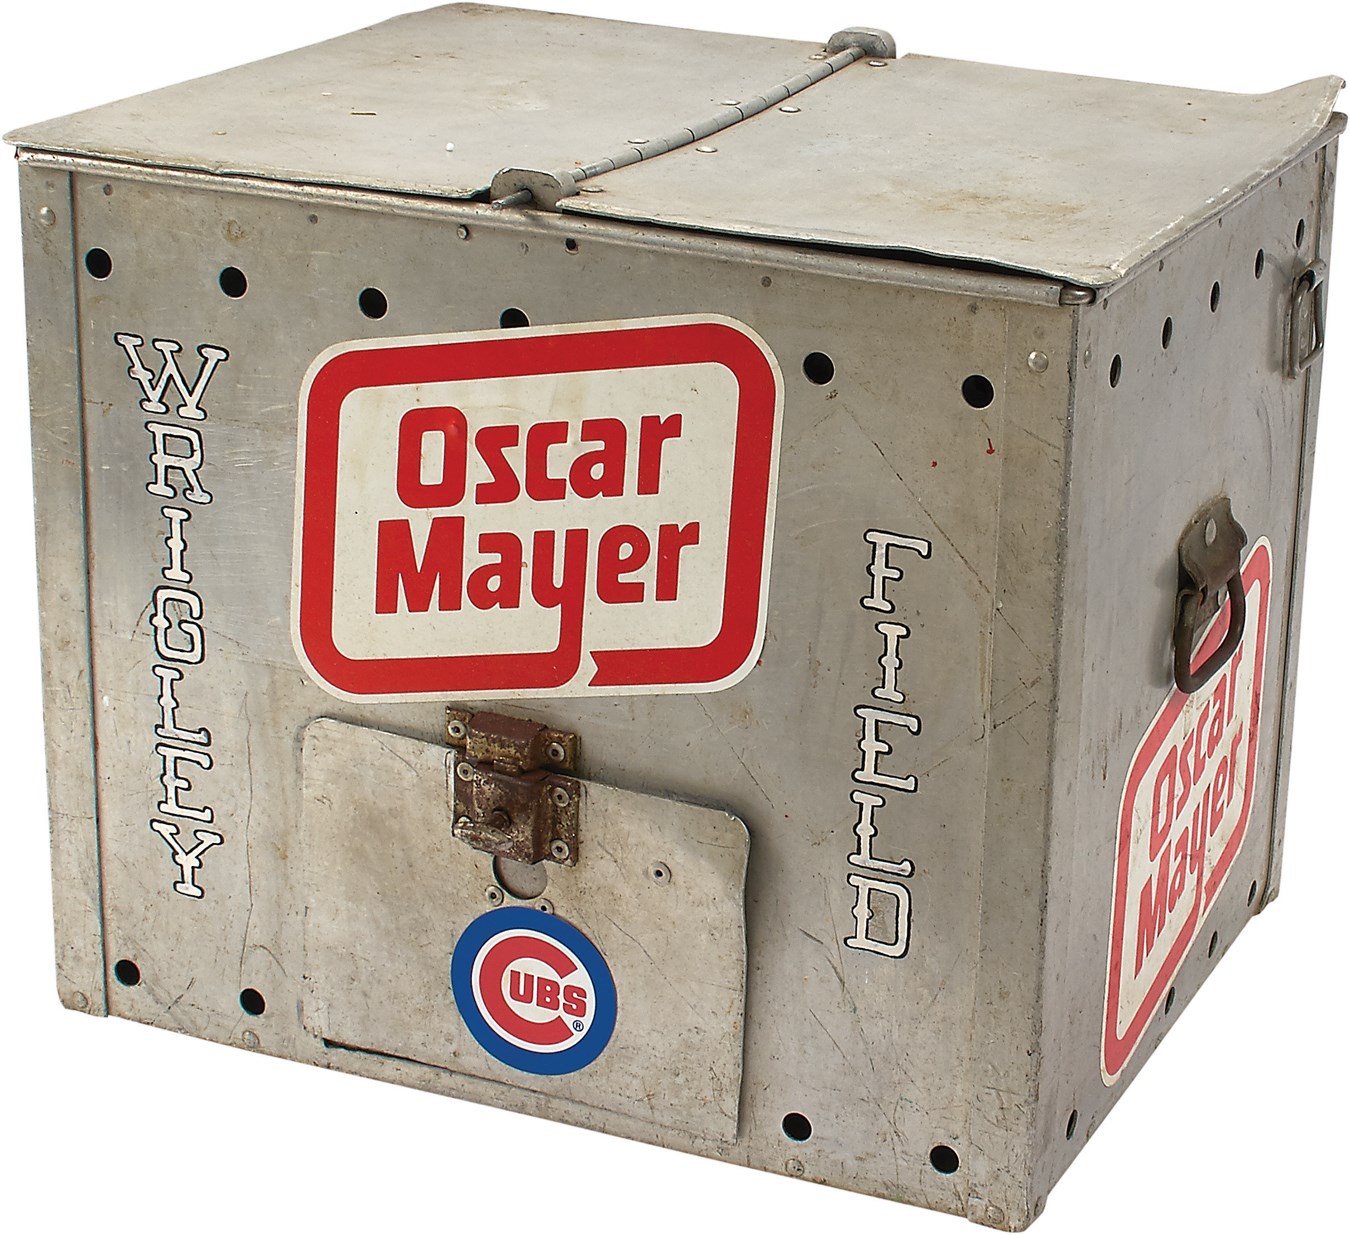 Chicago Cubs & Wrigley Field - 1950s Wrigley Field Hot Dog Steamer